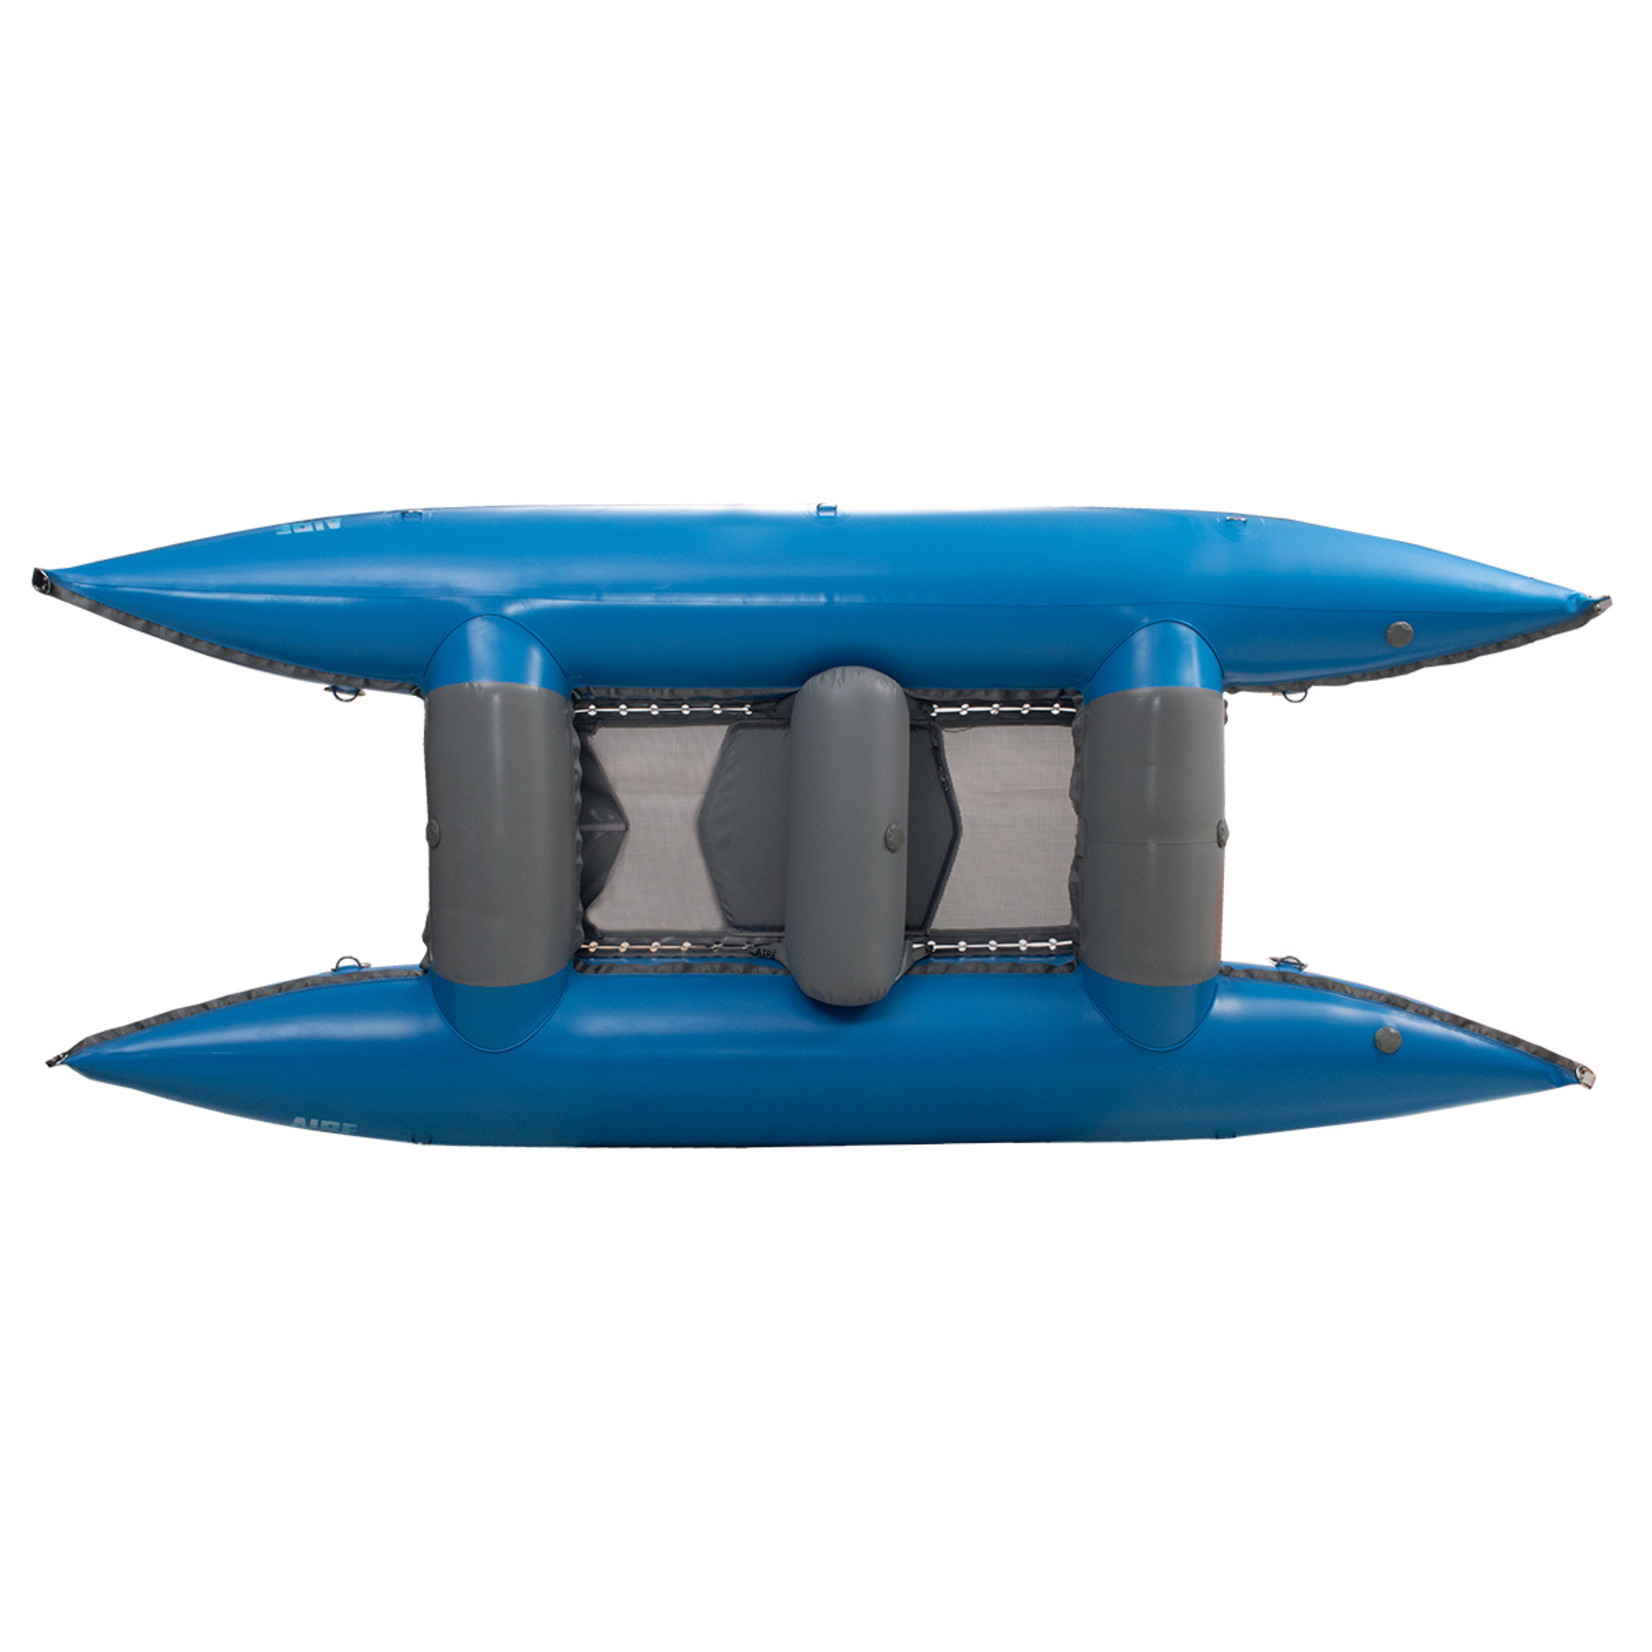 UWG Rental Paddle Boat AIRE Sabertooth Frameless Cataraft